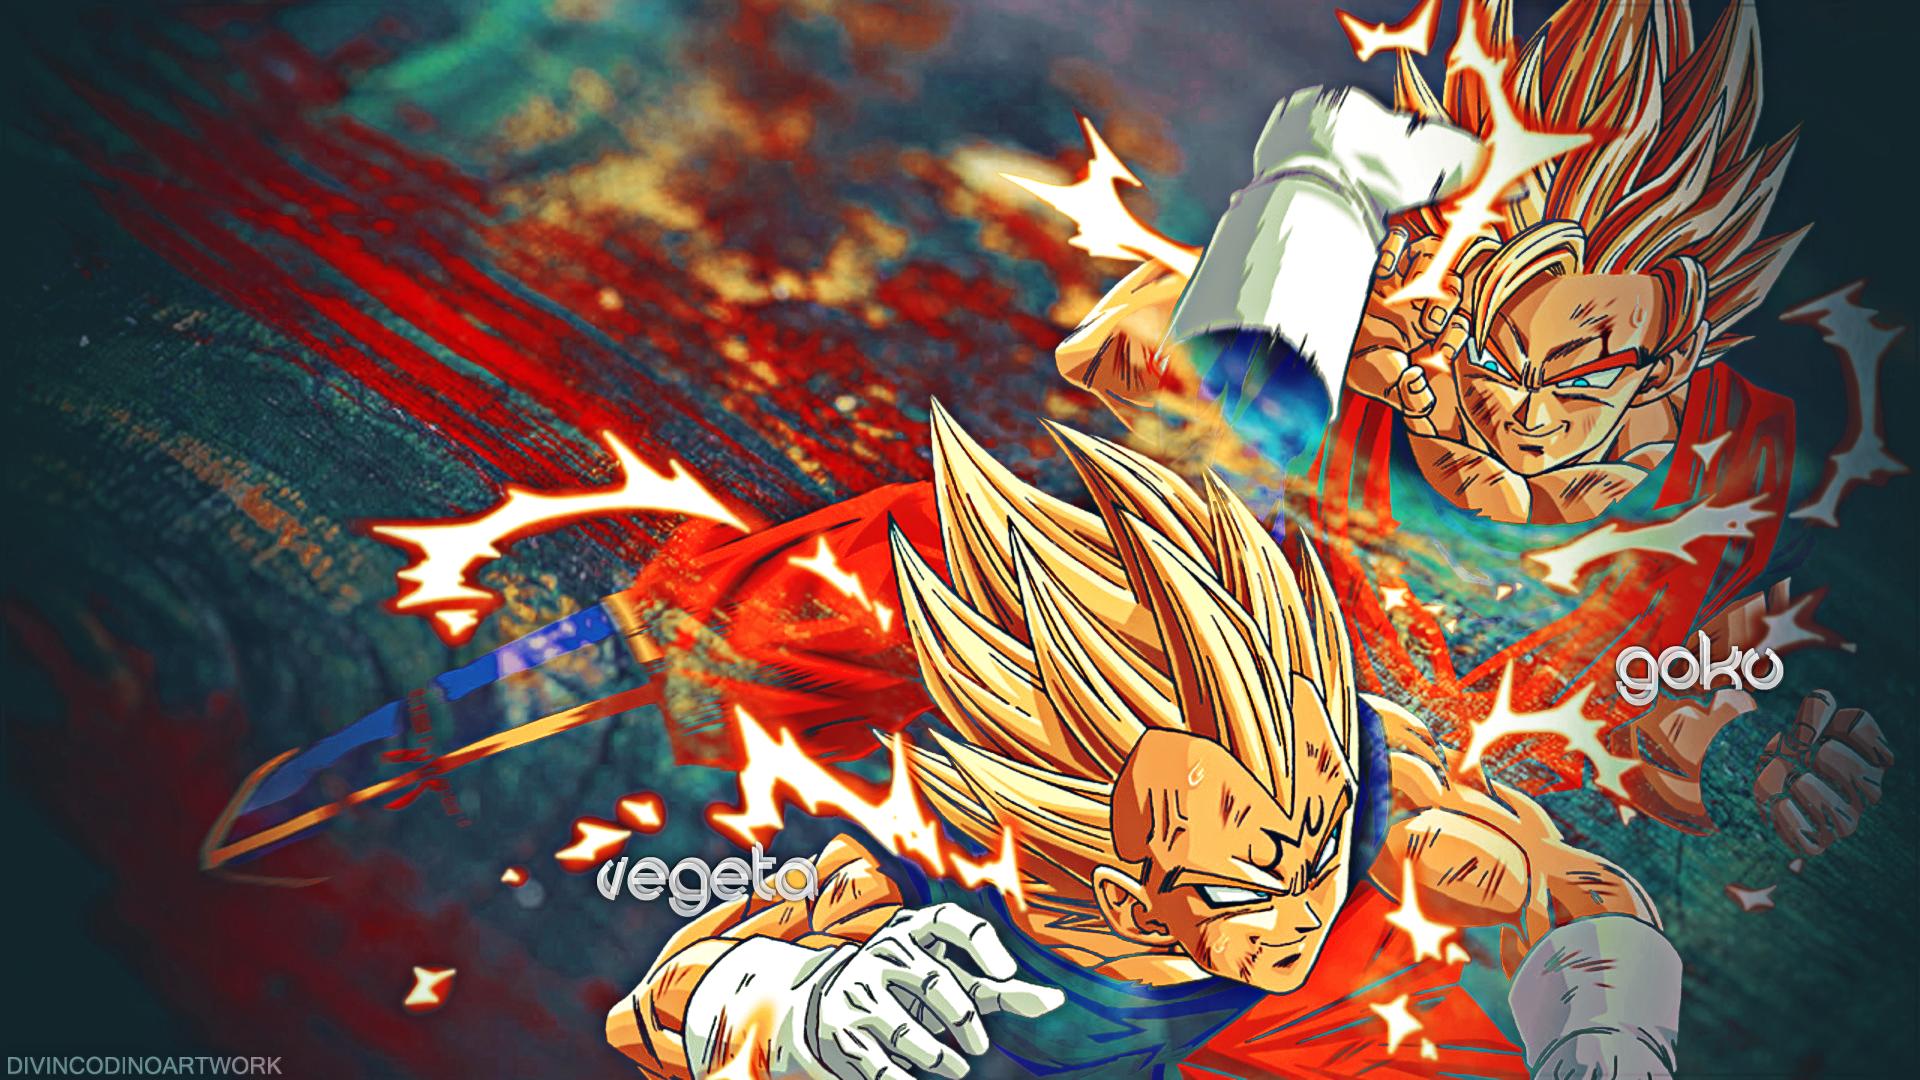 Dragon Ball Z HD wallpapers. #Awesome wallpapers. #Goku wallpapers